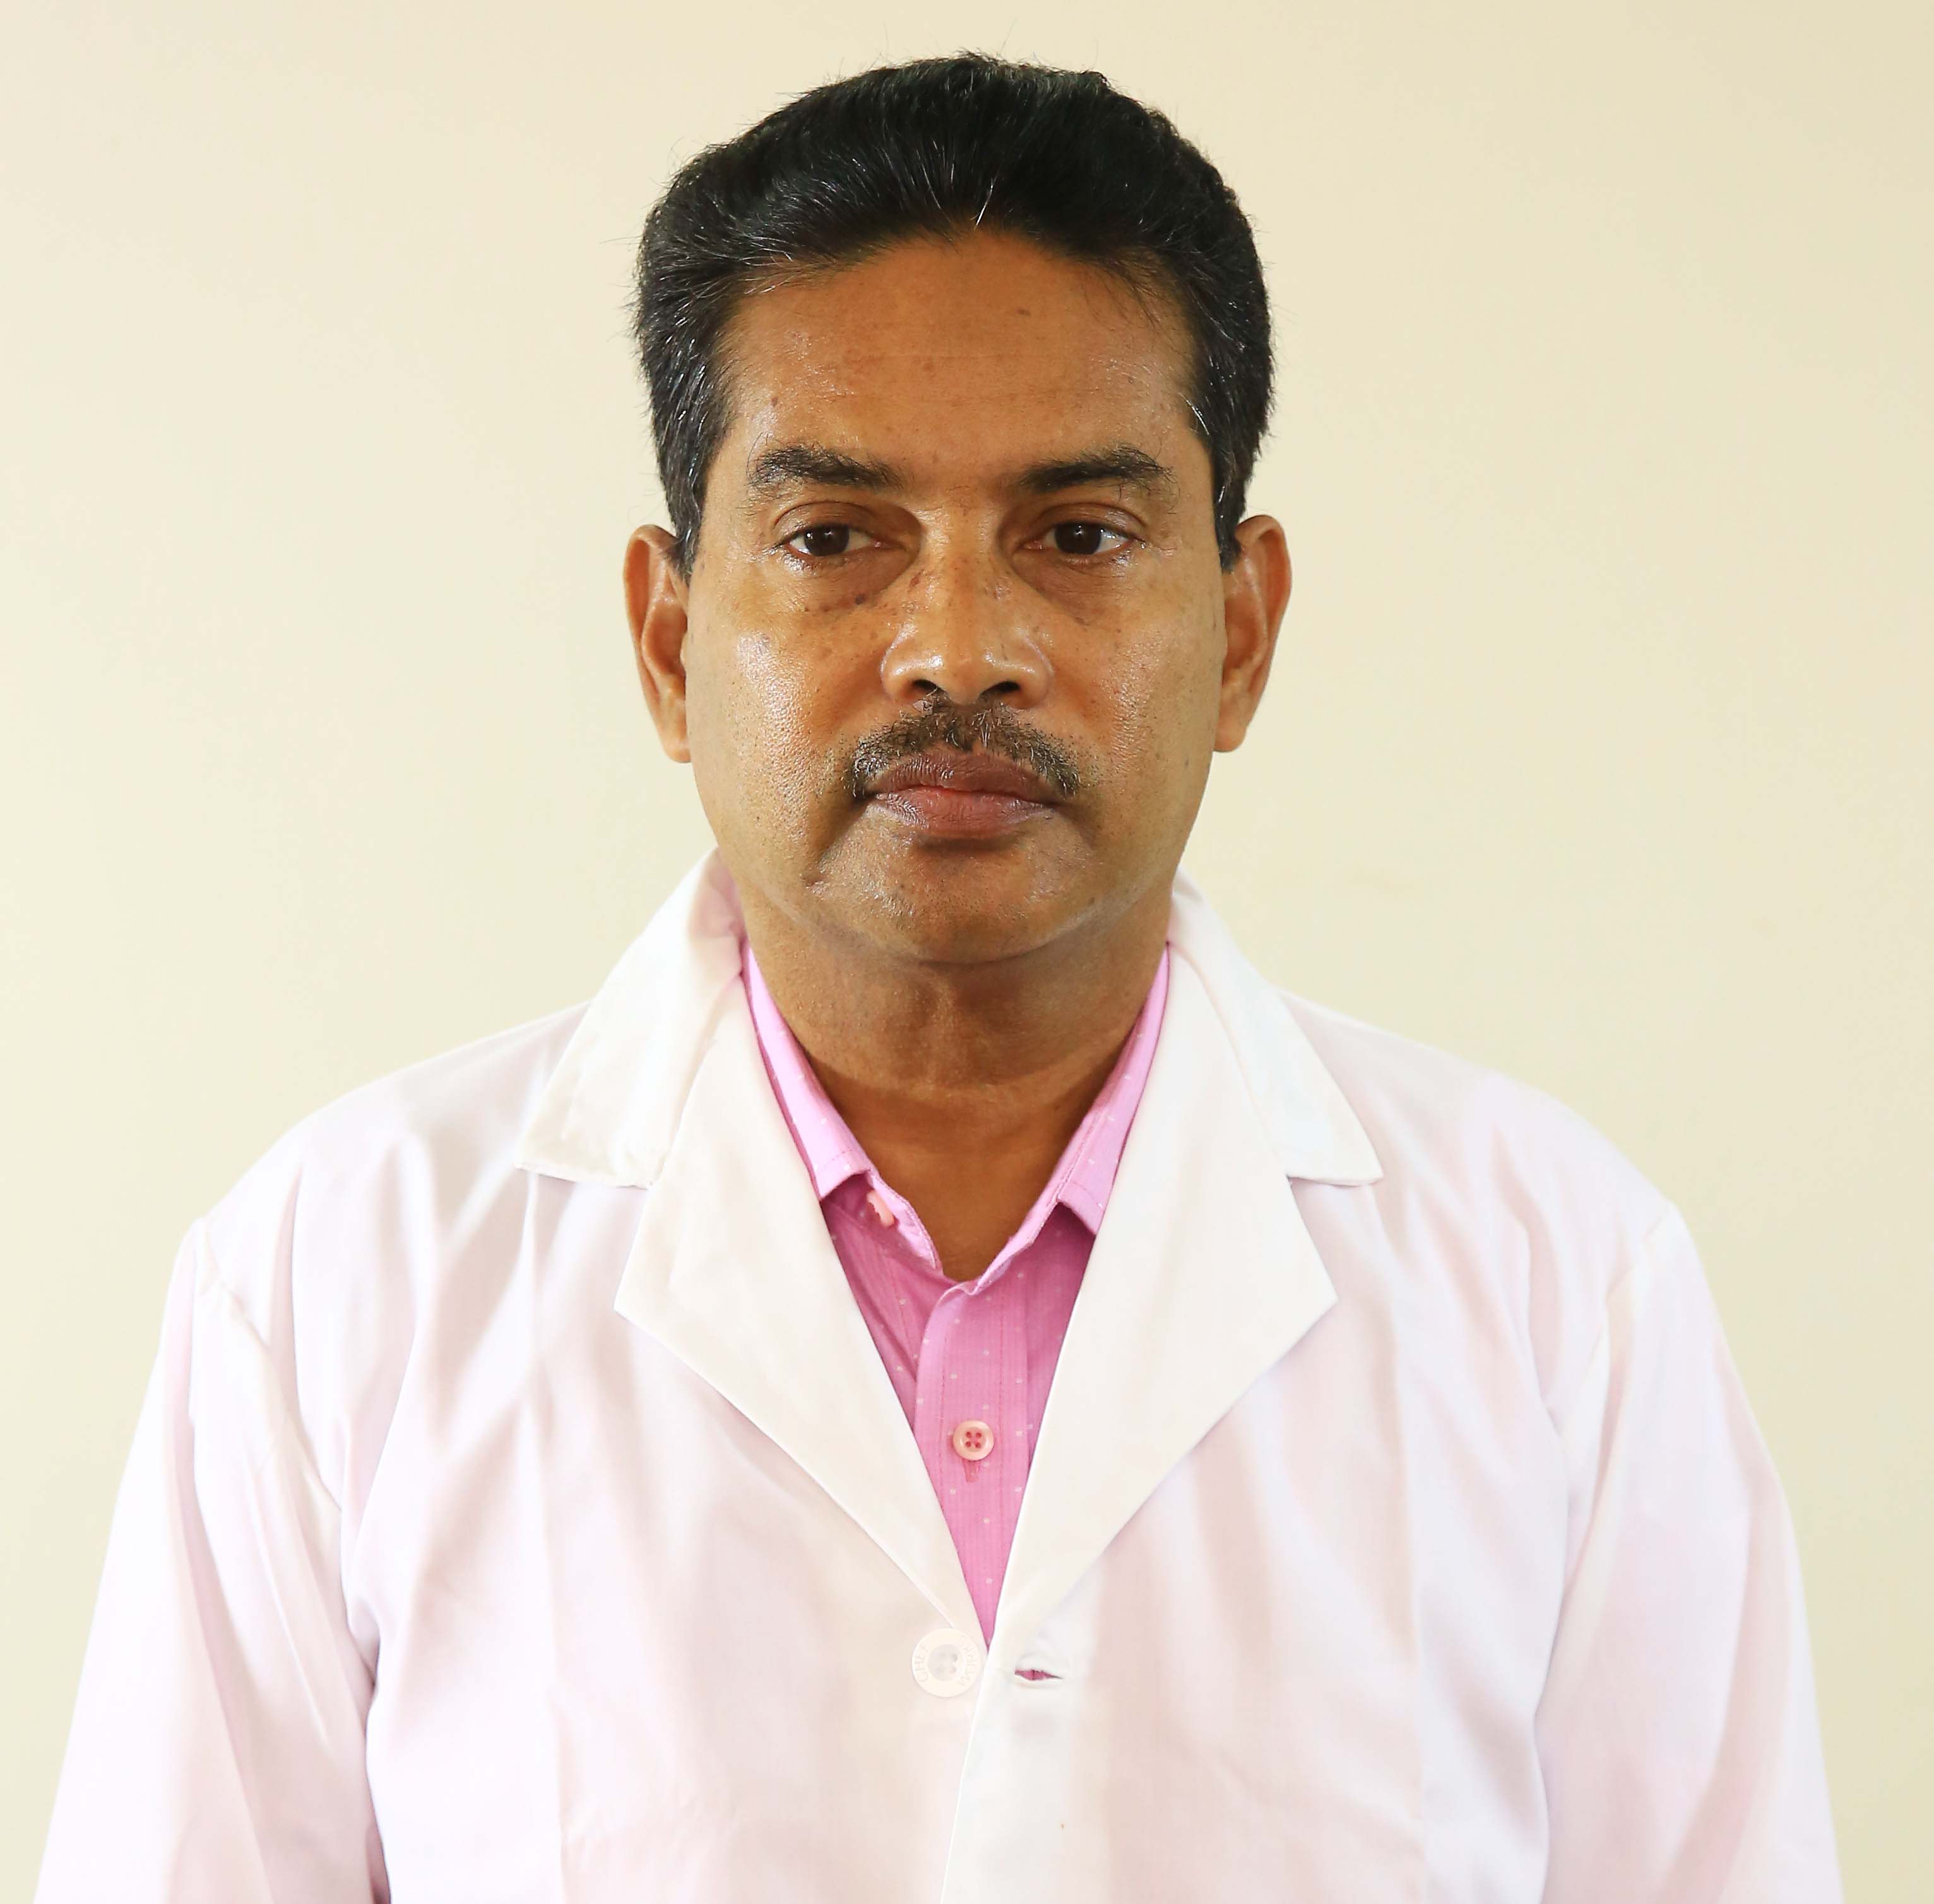 Dr. Mostafa Kamal